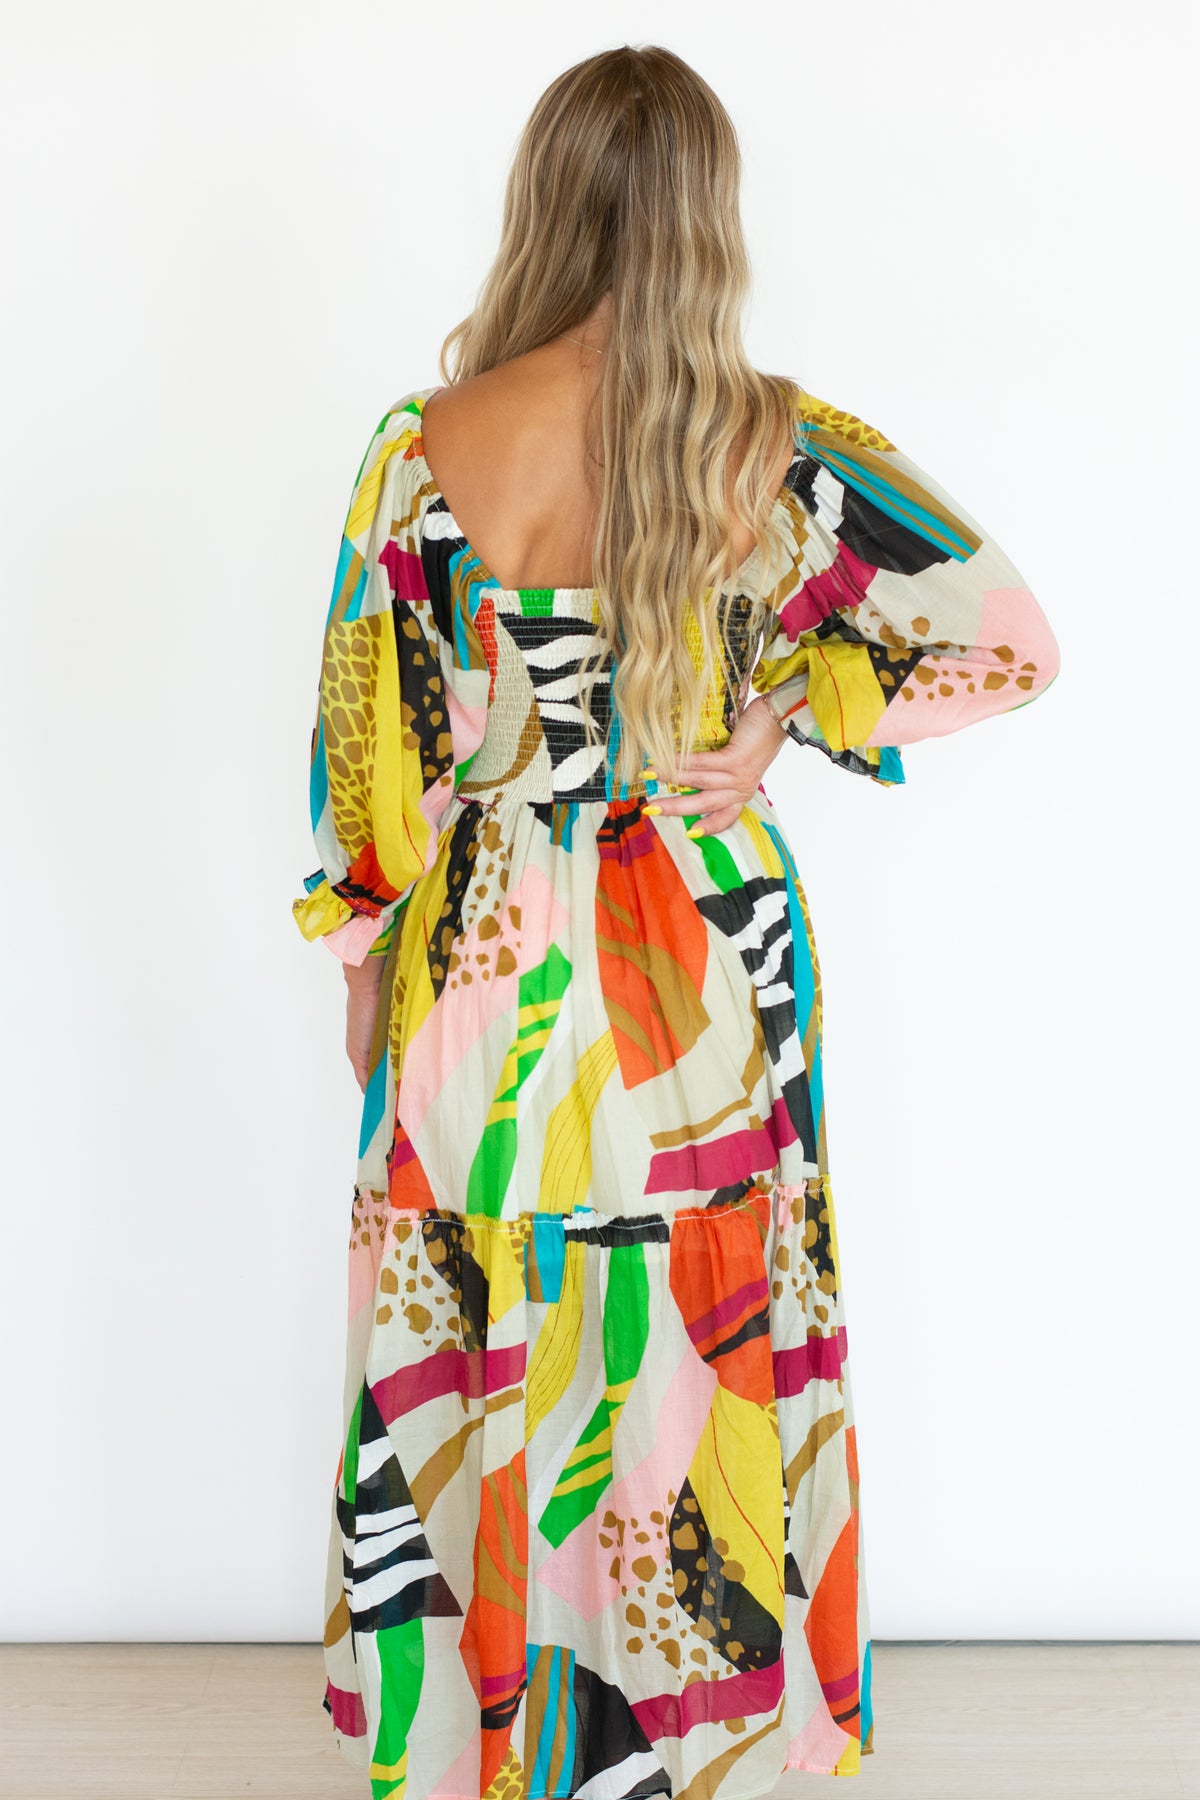 Apricot Lane Boutique Peoria | Dresses, Accessories & Women's Fashion#N ...